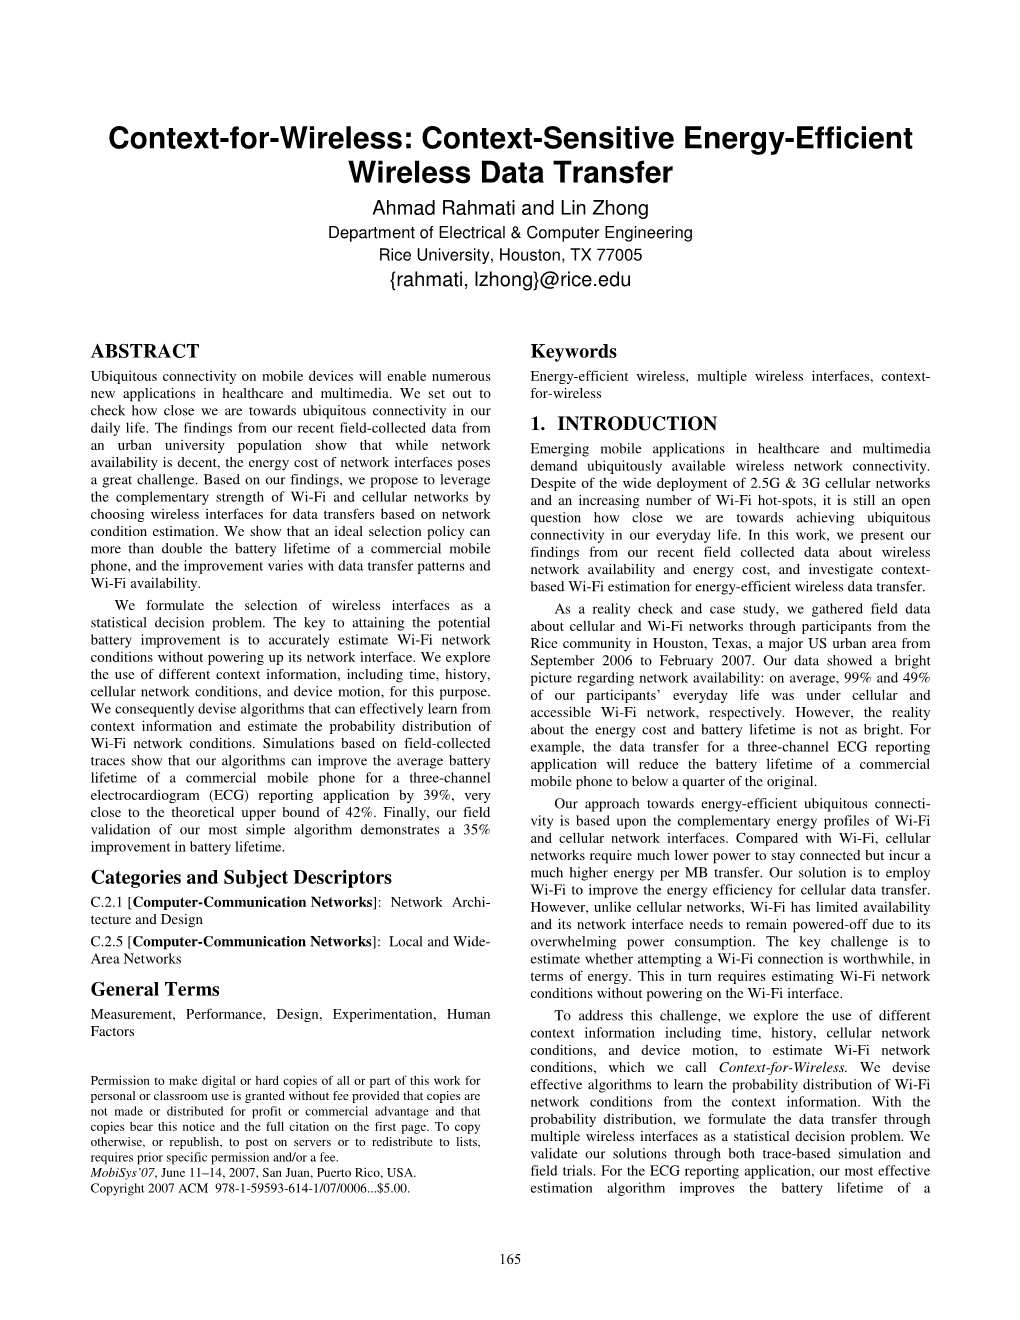 Context-Sensitive Energy-Efficient Wireless Data Transfer